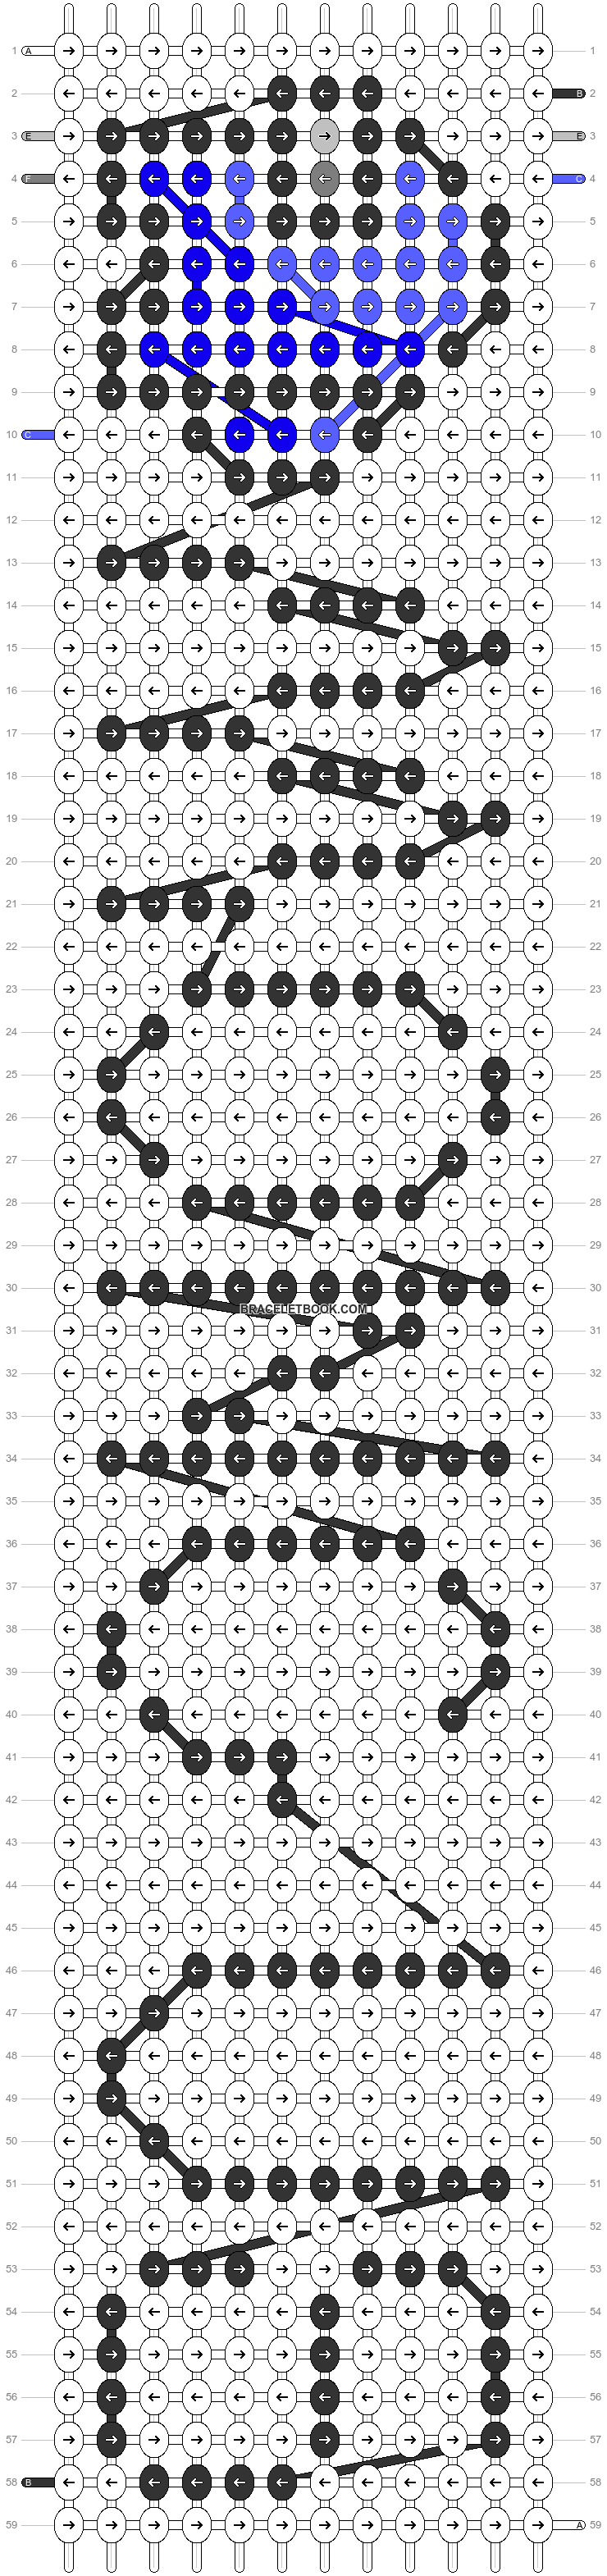 Alpha pattern #55655 variation #101759 pattern